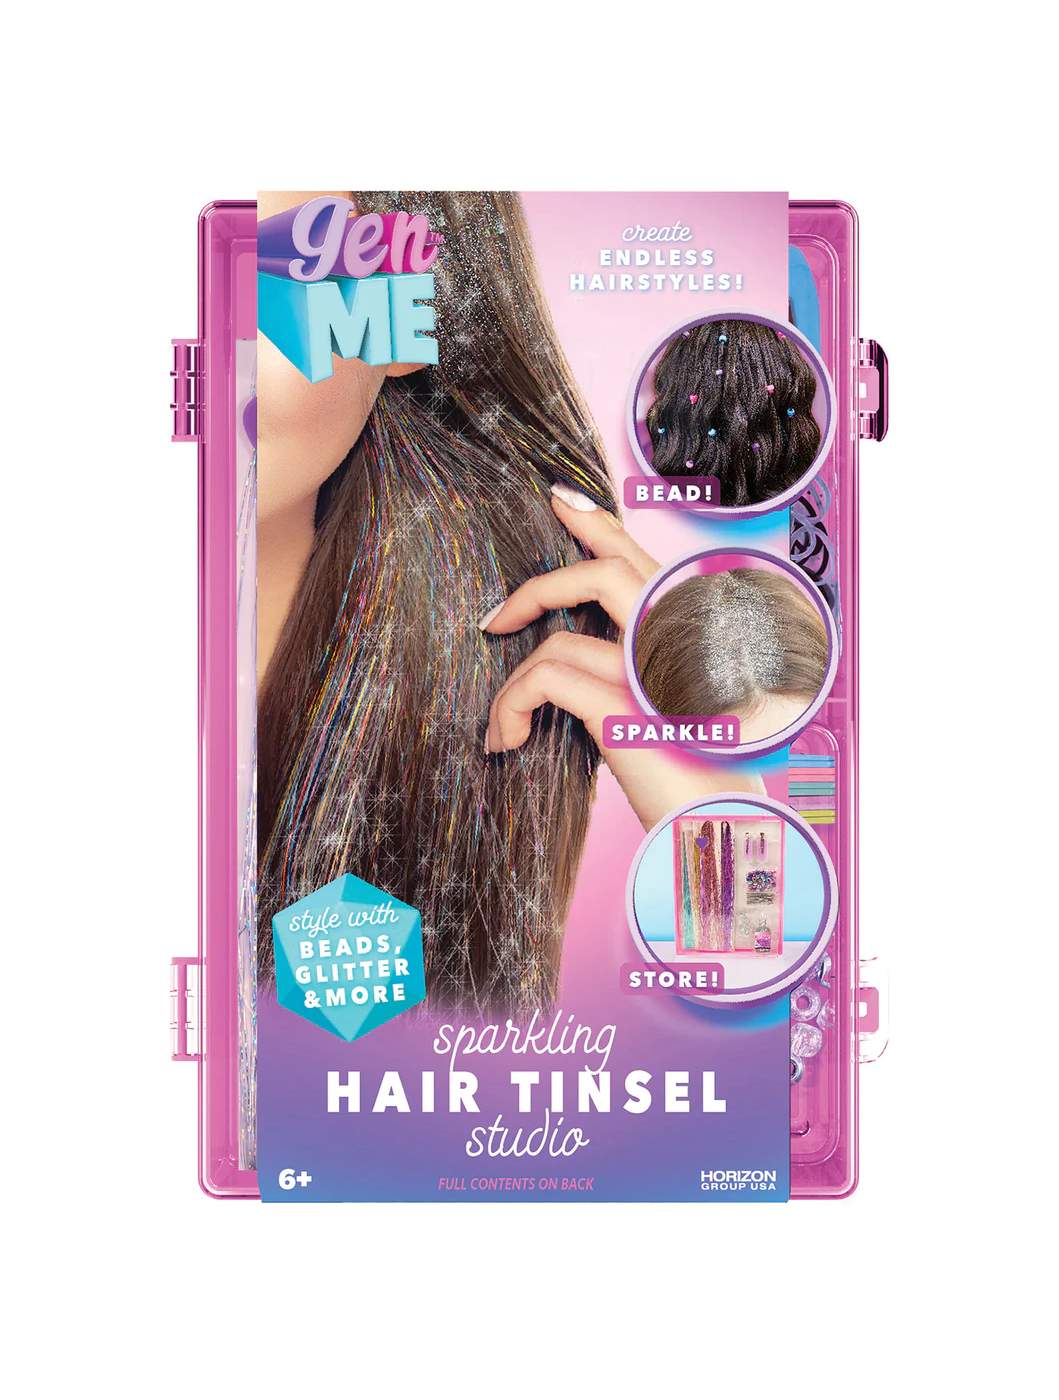 GenMe Sparkling Hair Tinsel Studio; image 1 of 4